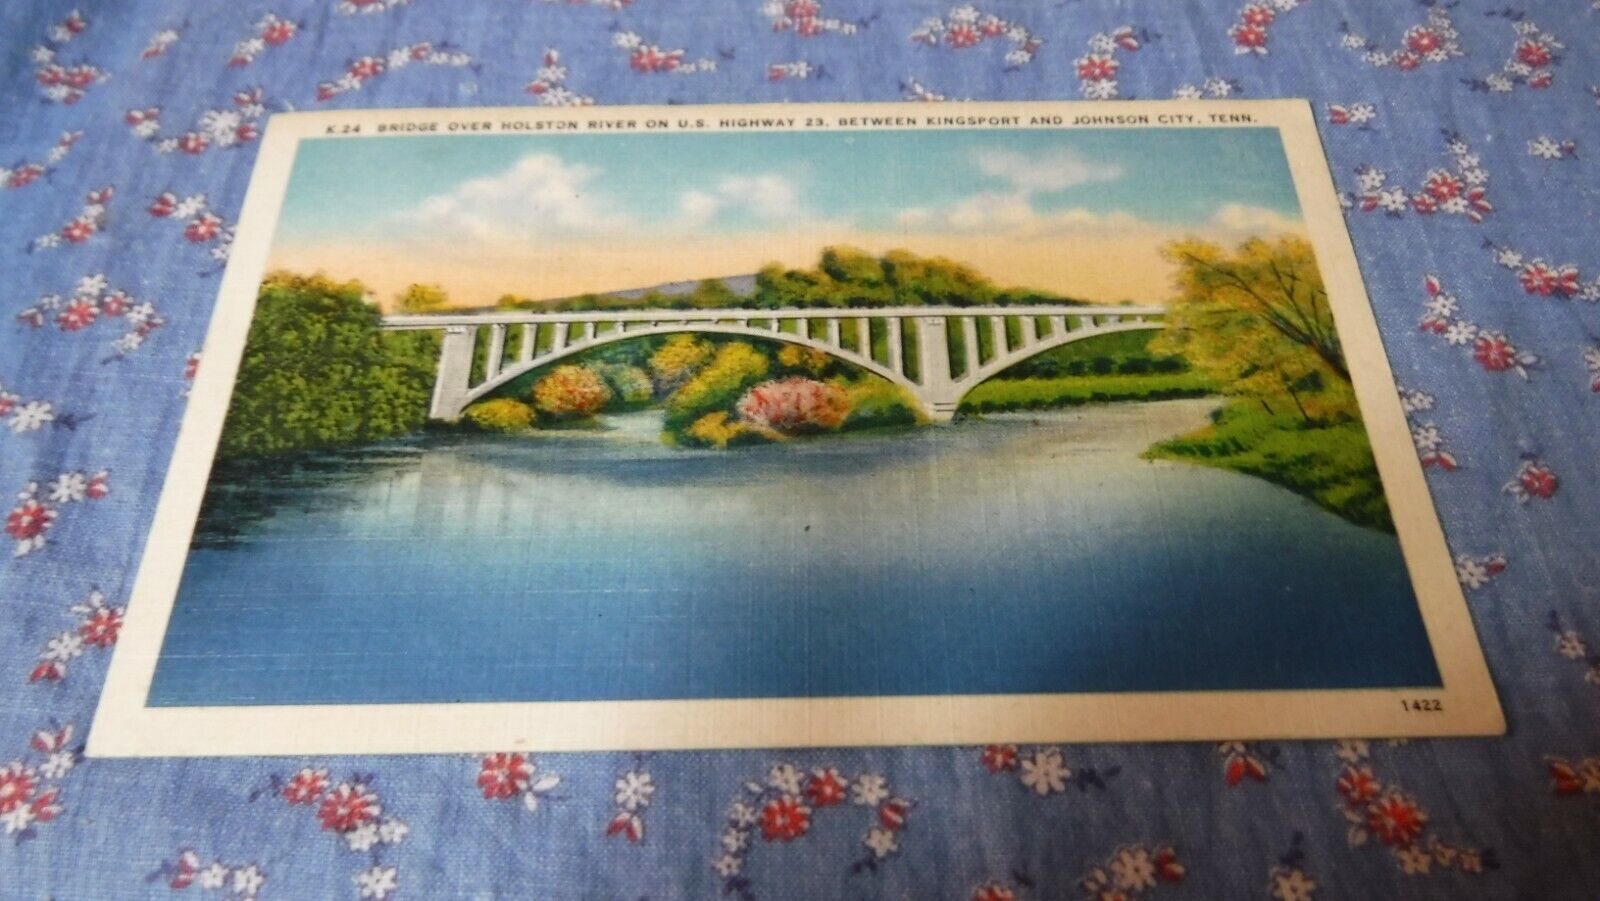 Old Postcard 1946 Mountain Home  Bridge Over Holston River on US Highway 23